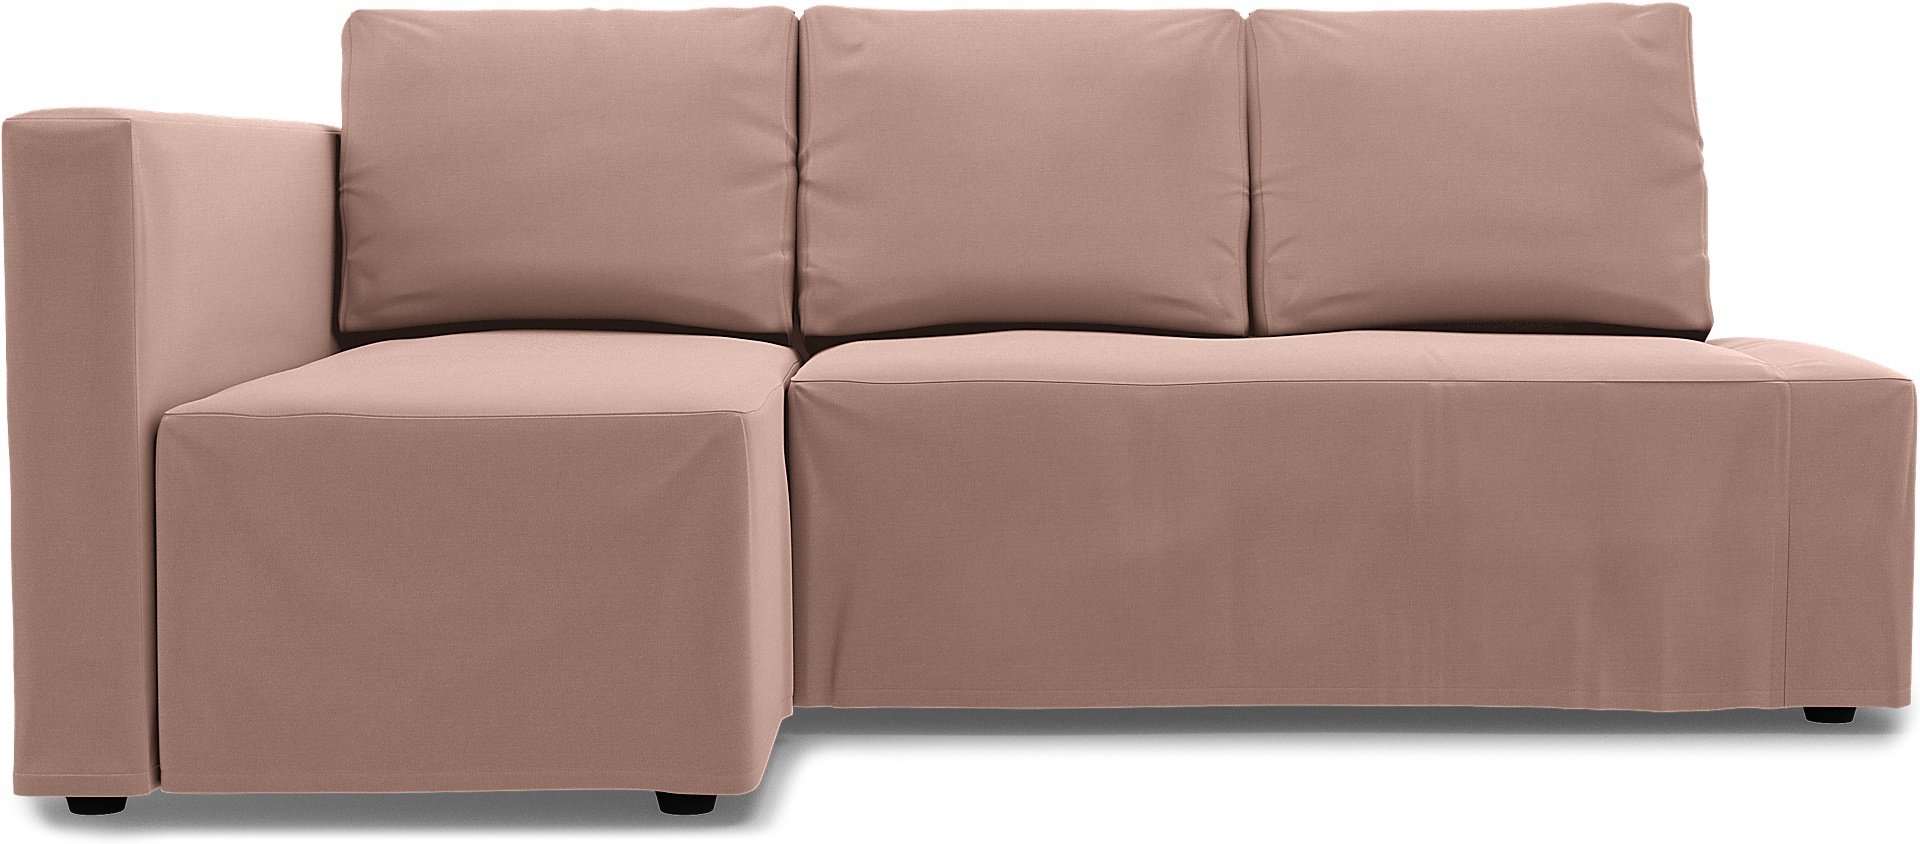 IKEA - Friheten Sofa Bed with Left Chaise Cover, Blush, Linen - Bemz